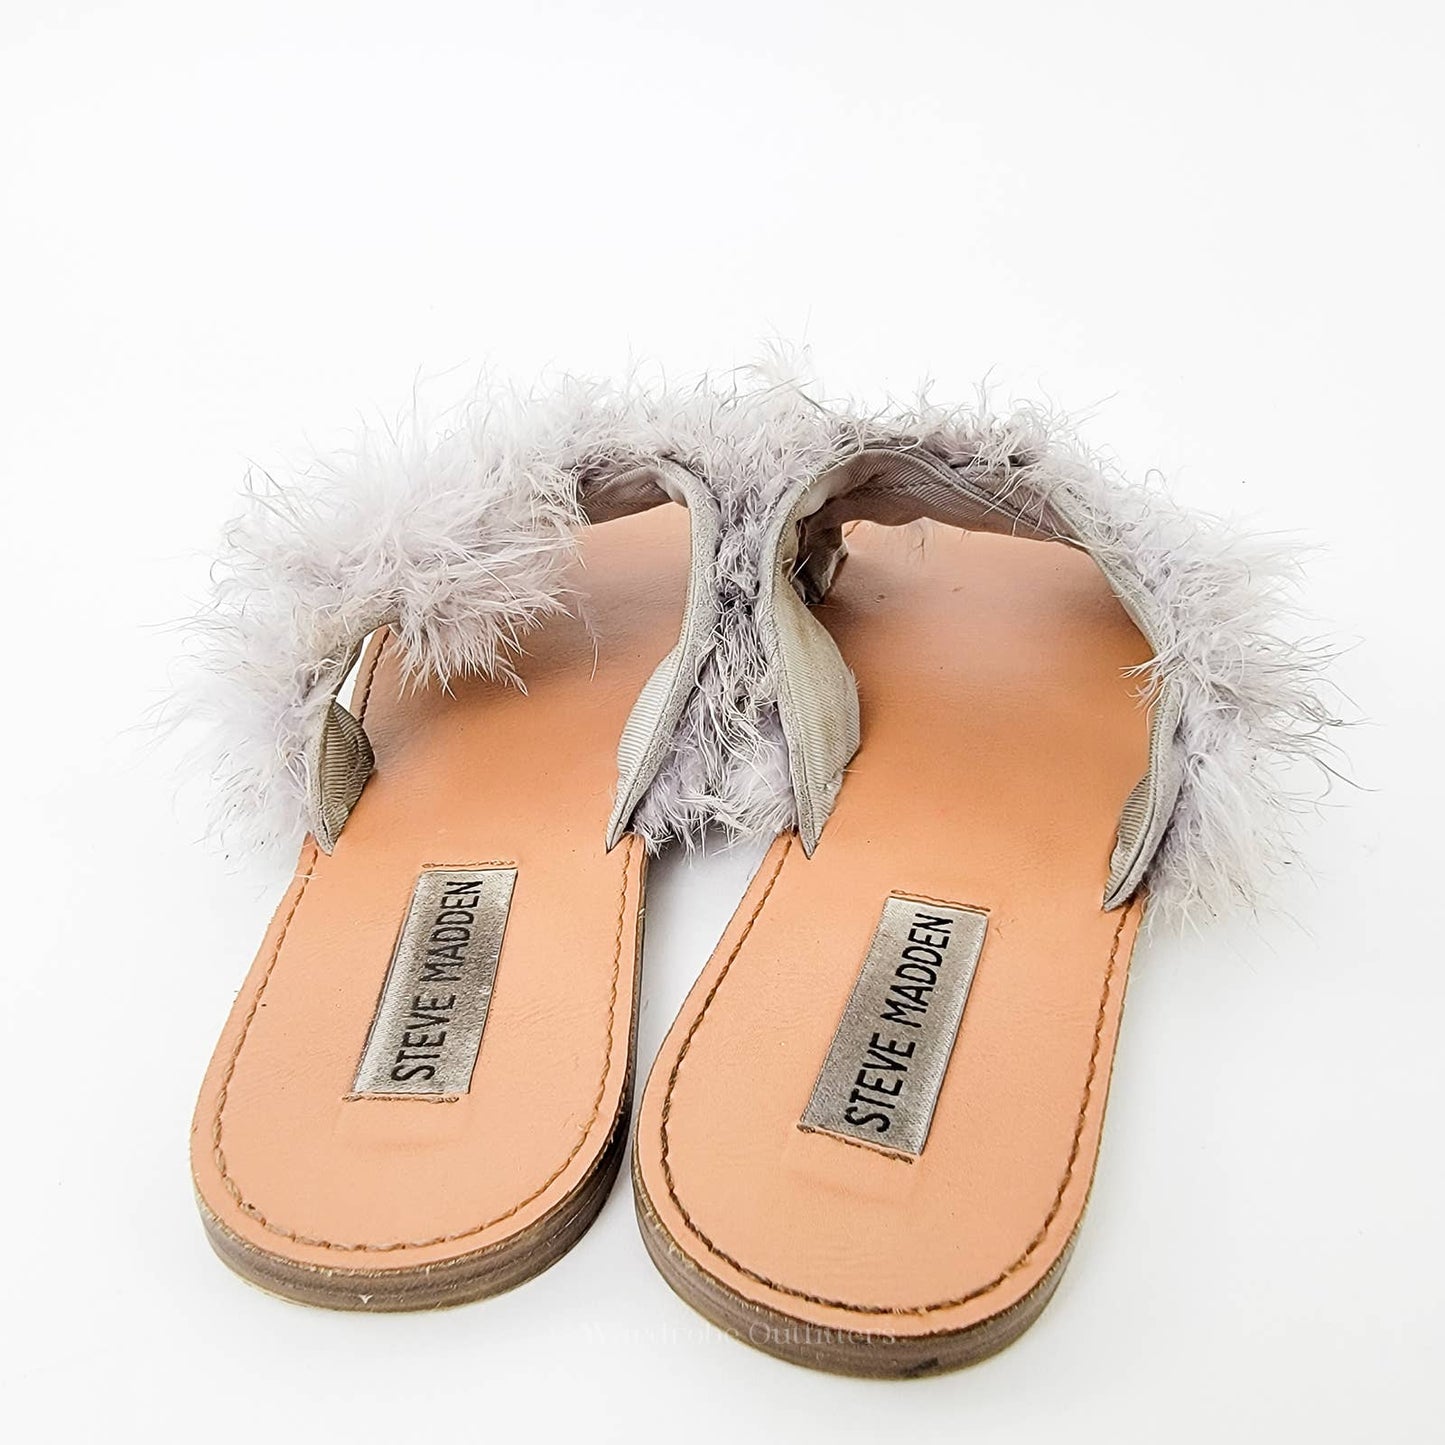 Steve Madden Boa Feather Ciara Slide Sandals - 7